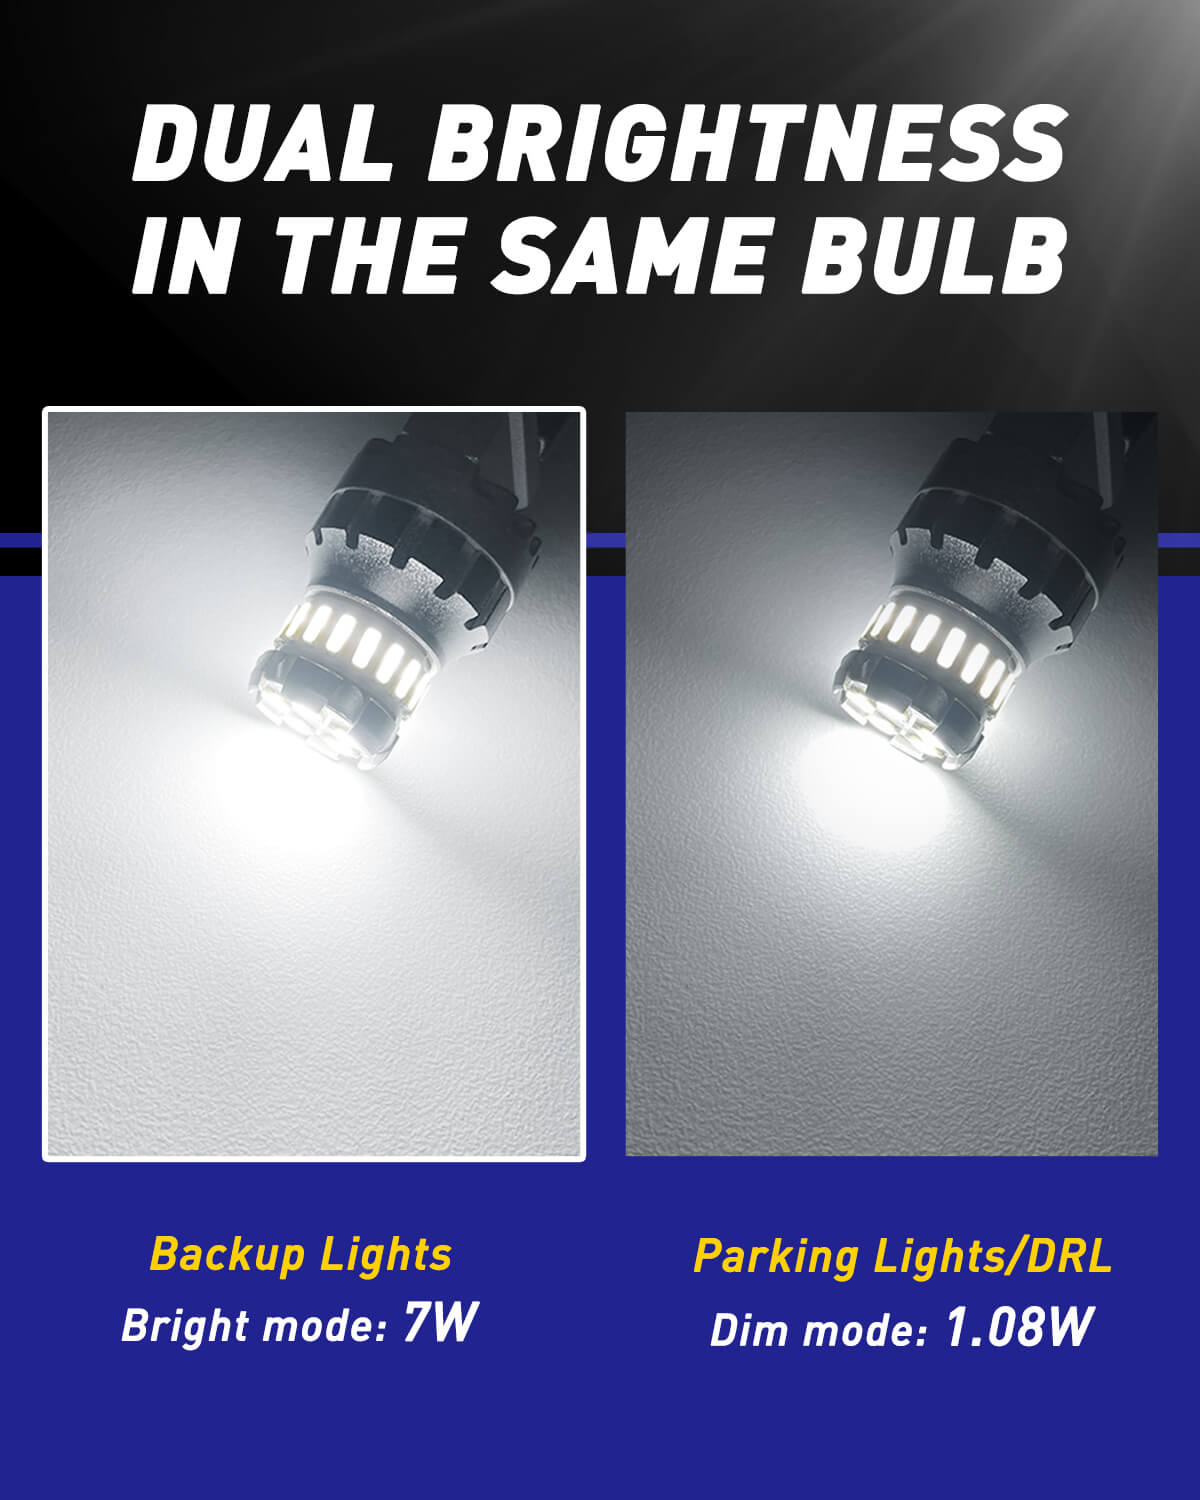 Autoone Headlight Bulb 1157 LED Headlight Light Bulb White 2 PCS